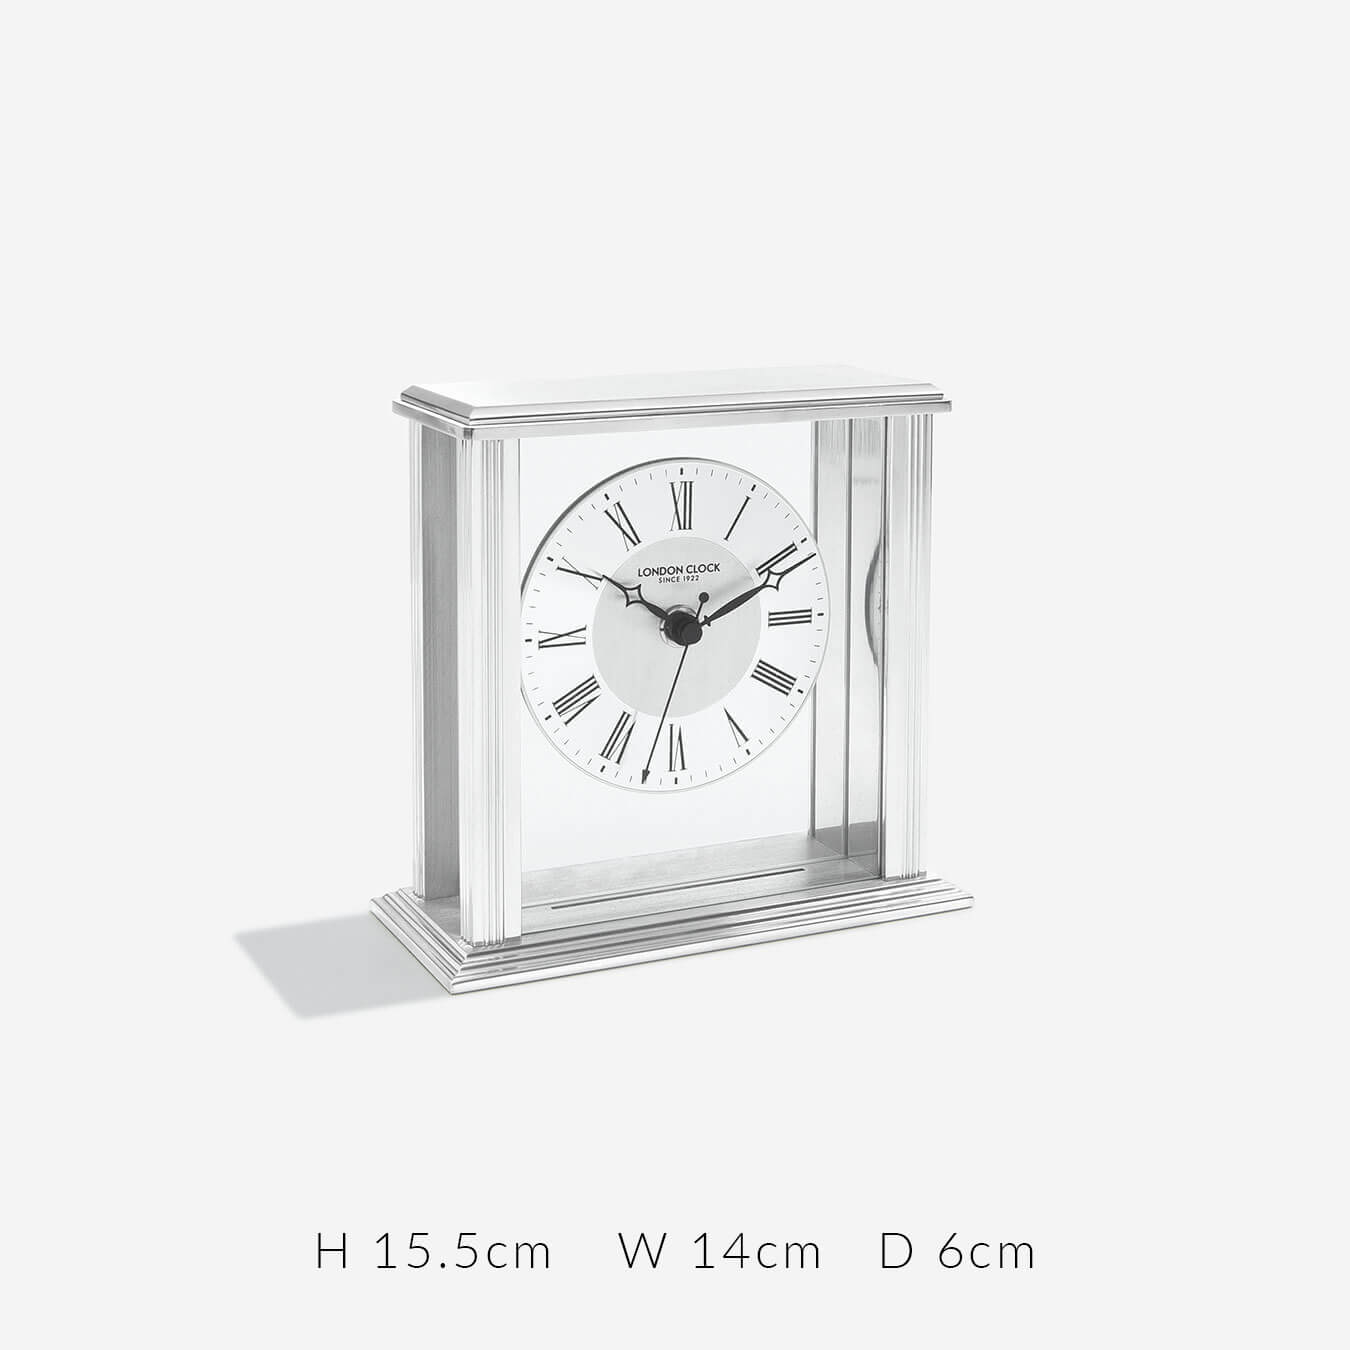 London Clock Company. Silver Flat Top Mantel Clock *STOCK DUE MARCH* - timeframedclocks